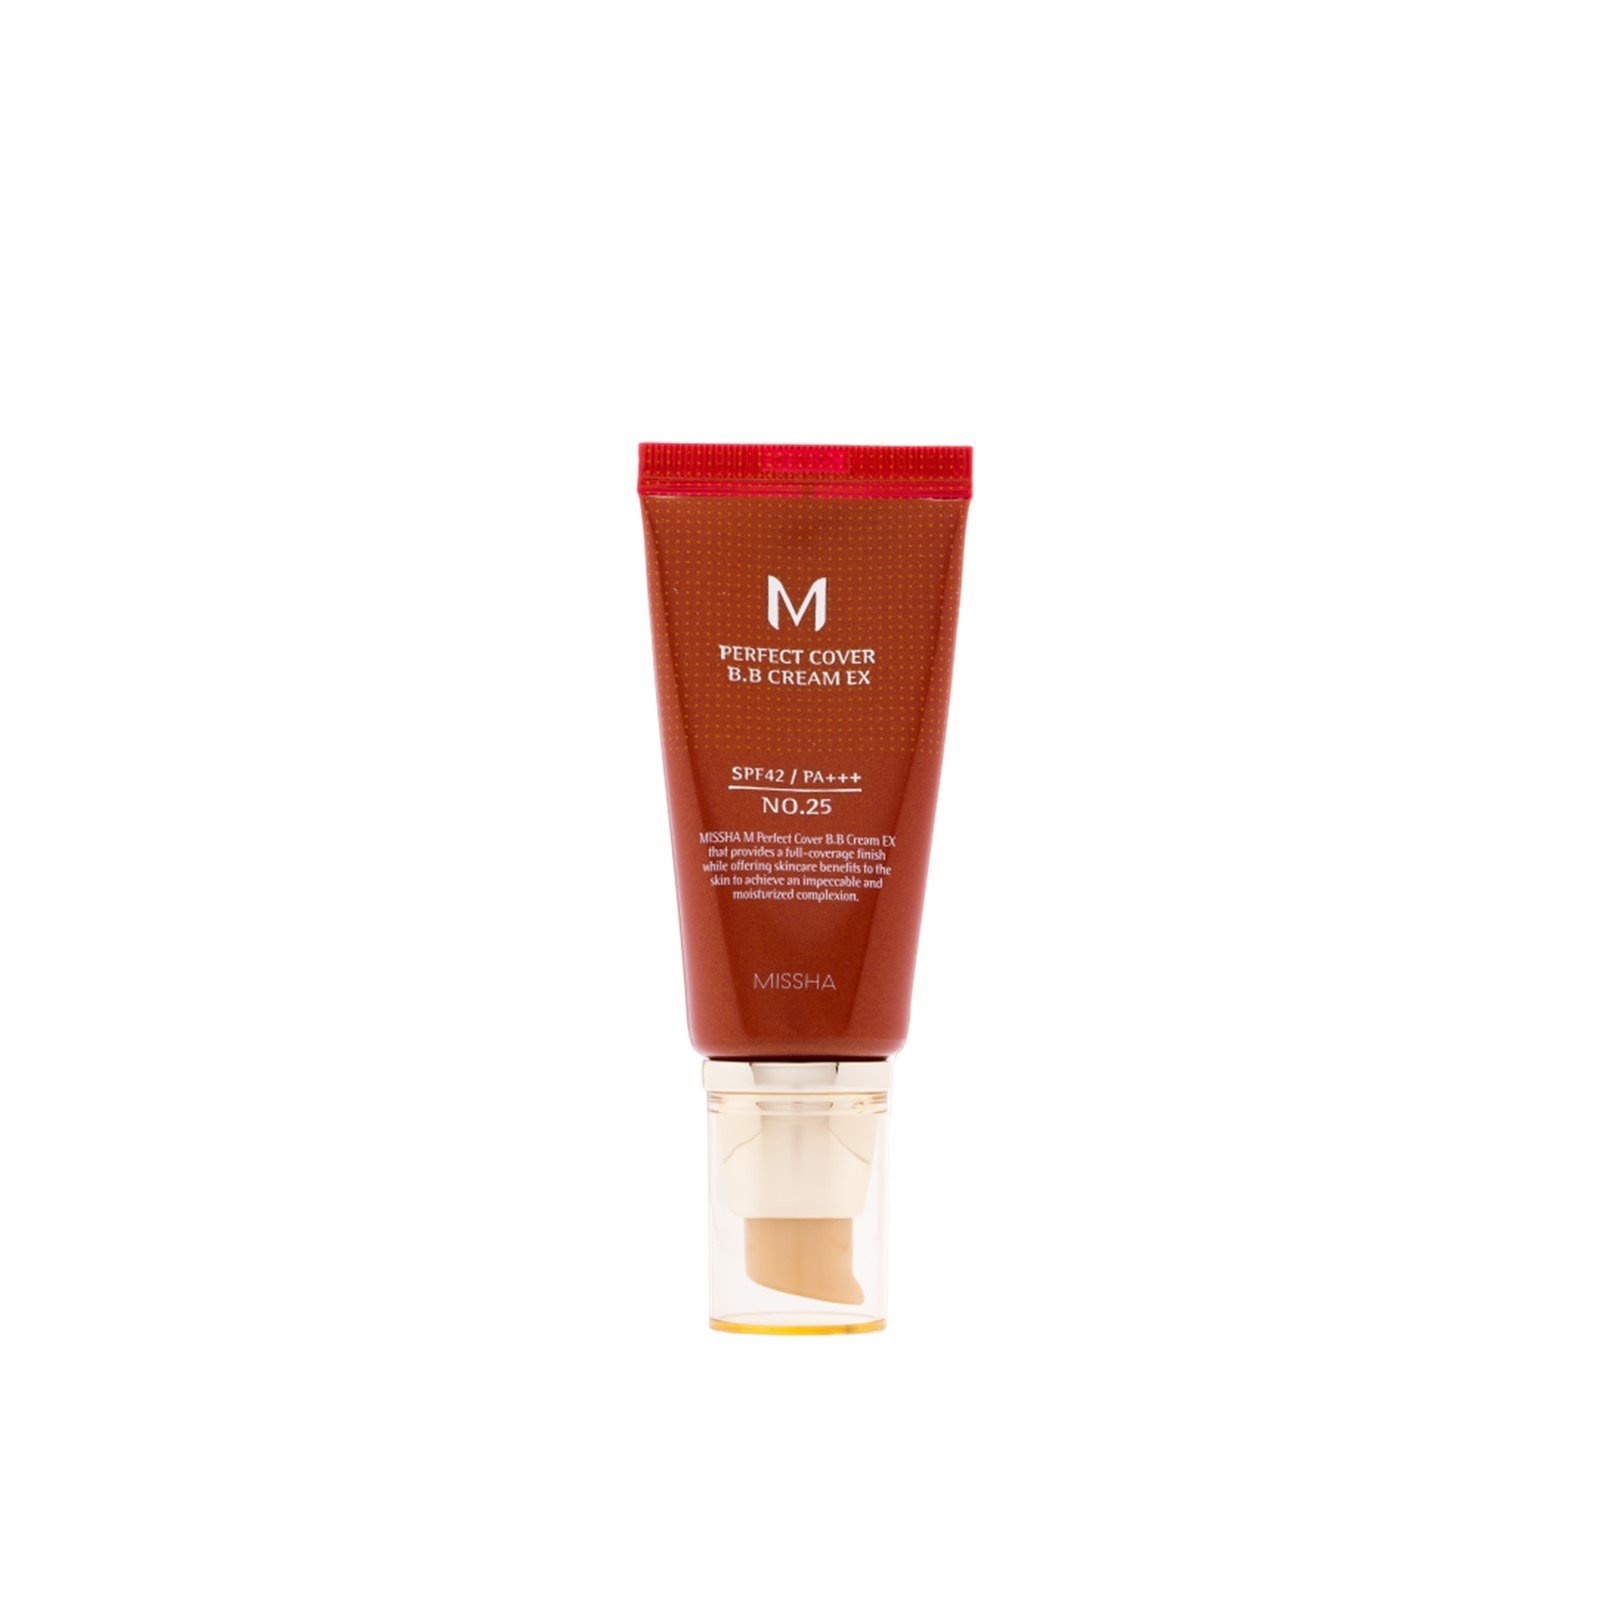 Missha M Perfect Cover BB Cream EX SPF42/PA+++ 25 Warm Beige 50ml (1.69 fl oz)